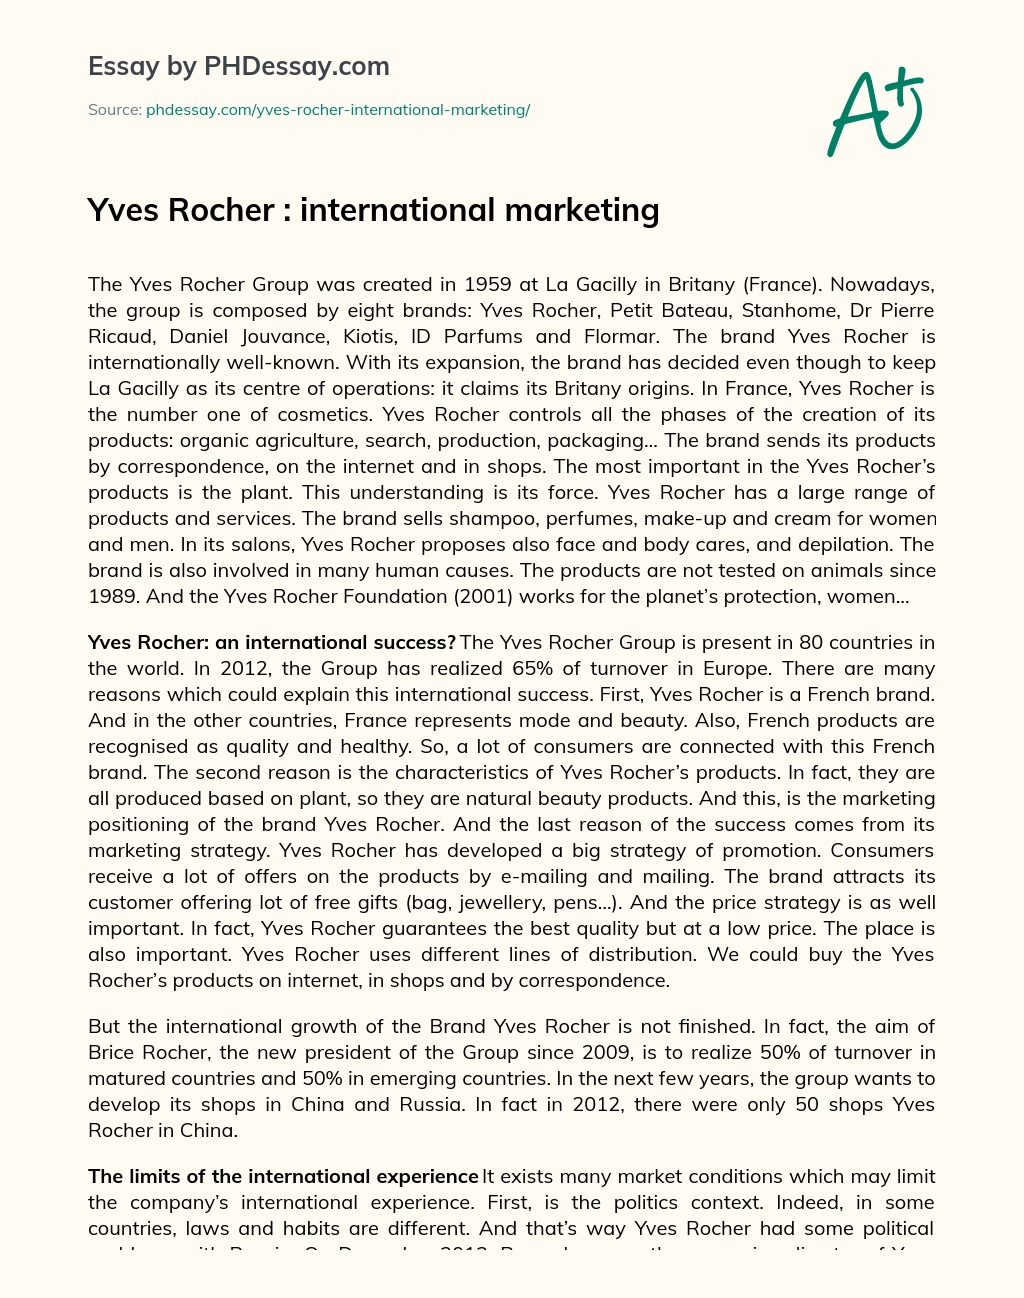 Yves Rocher : International Marketing essay